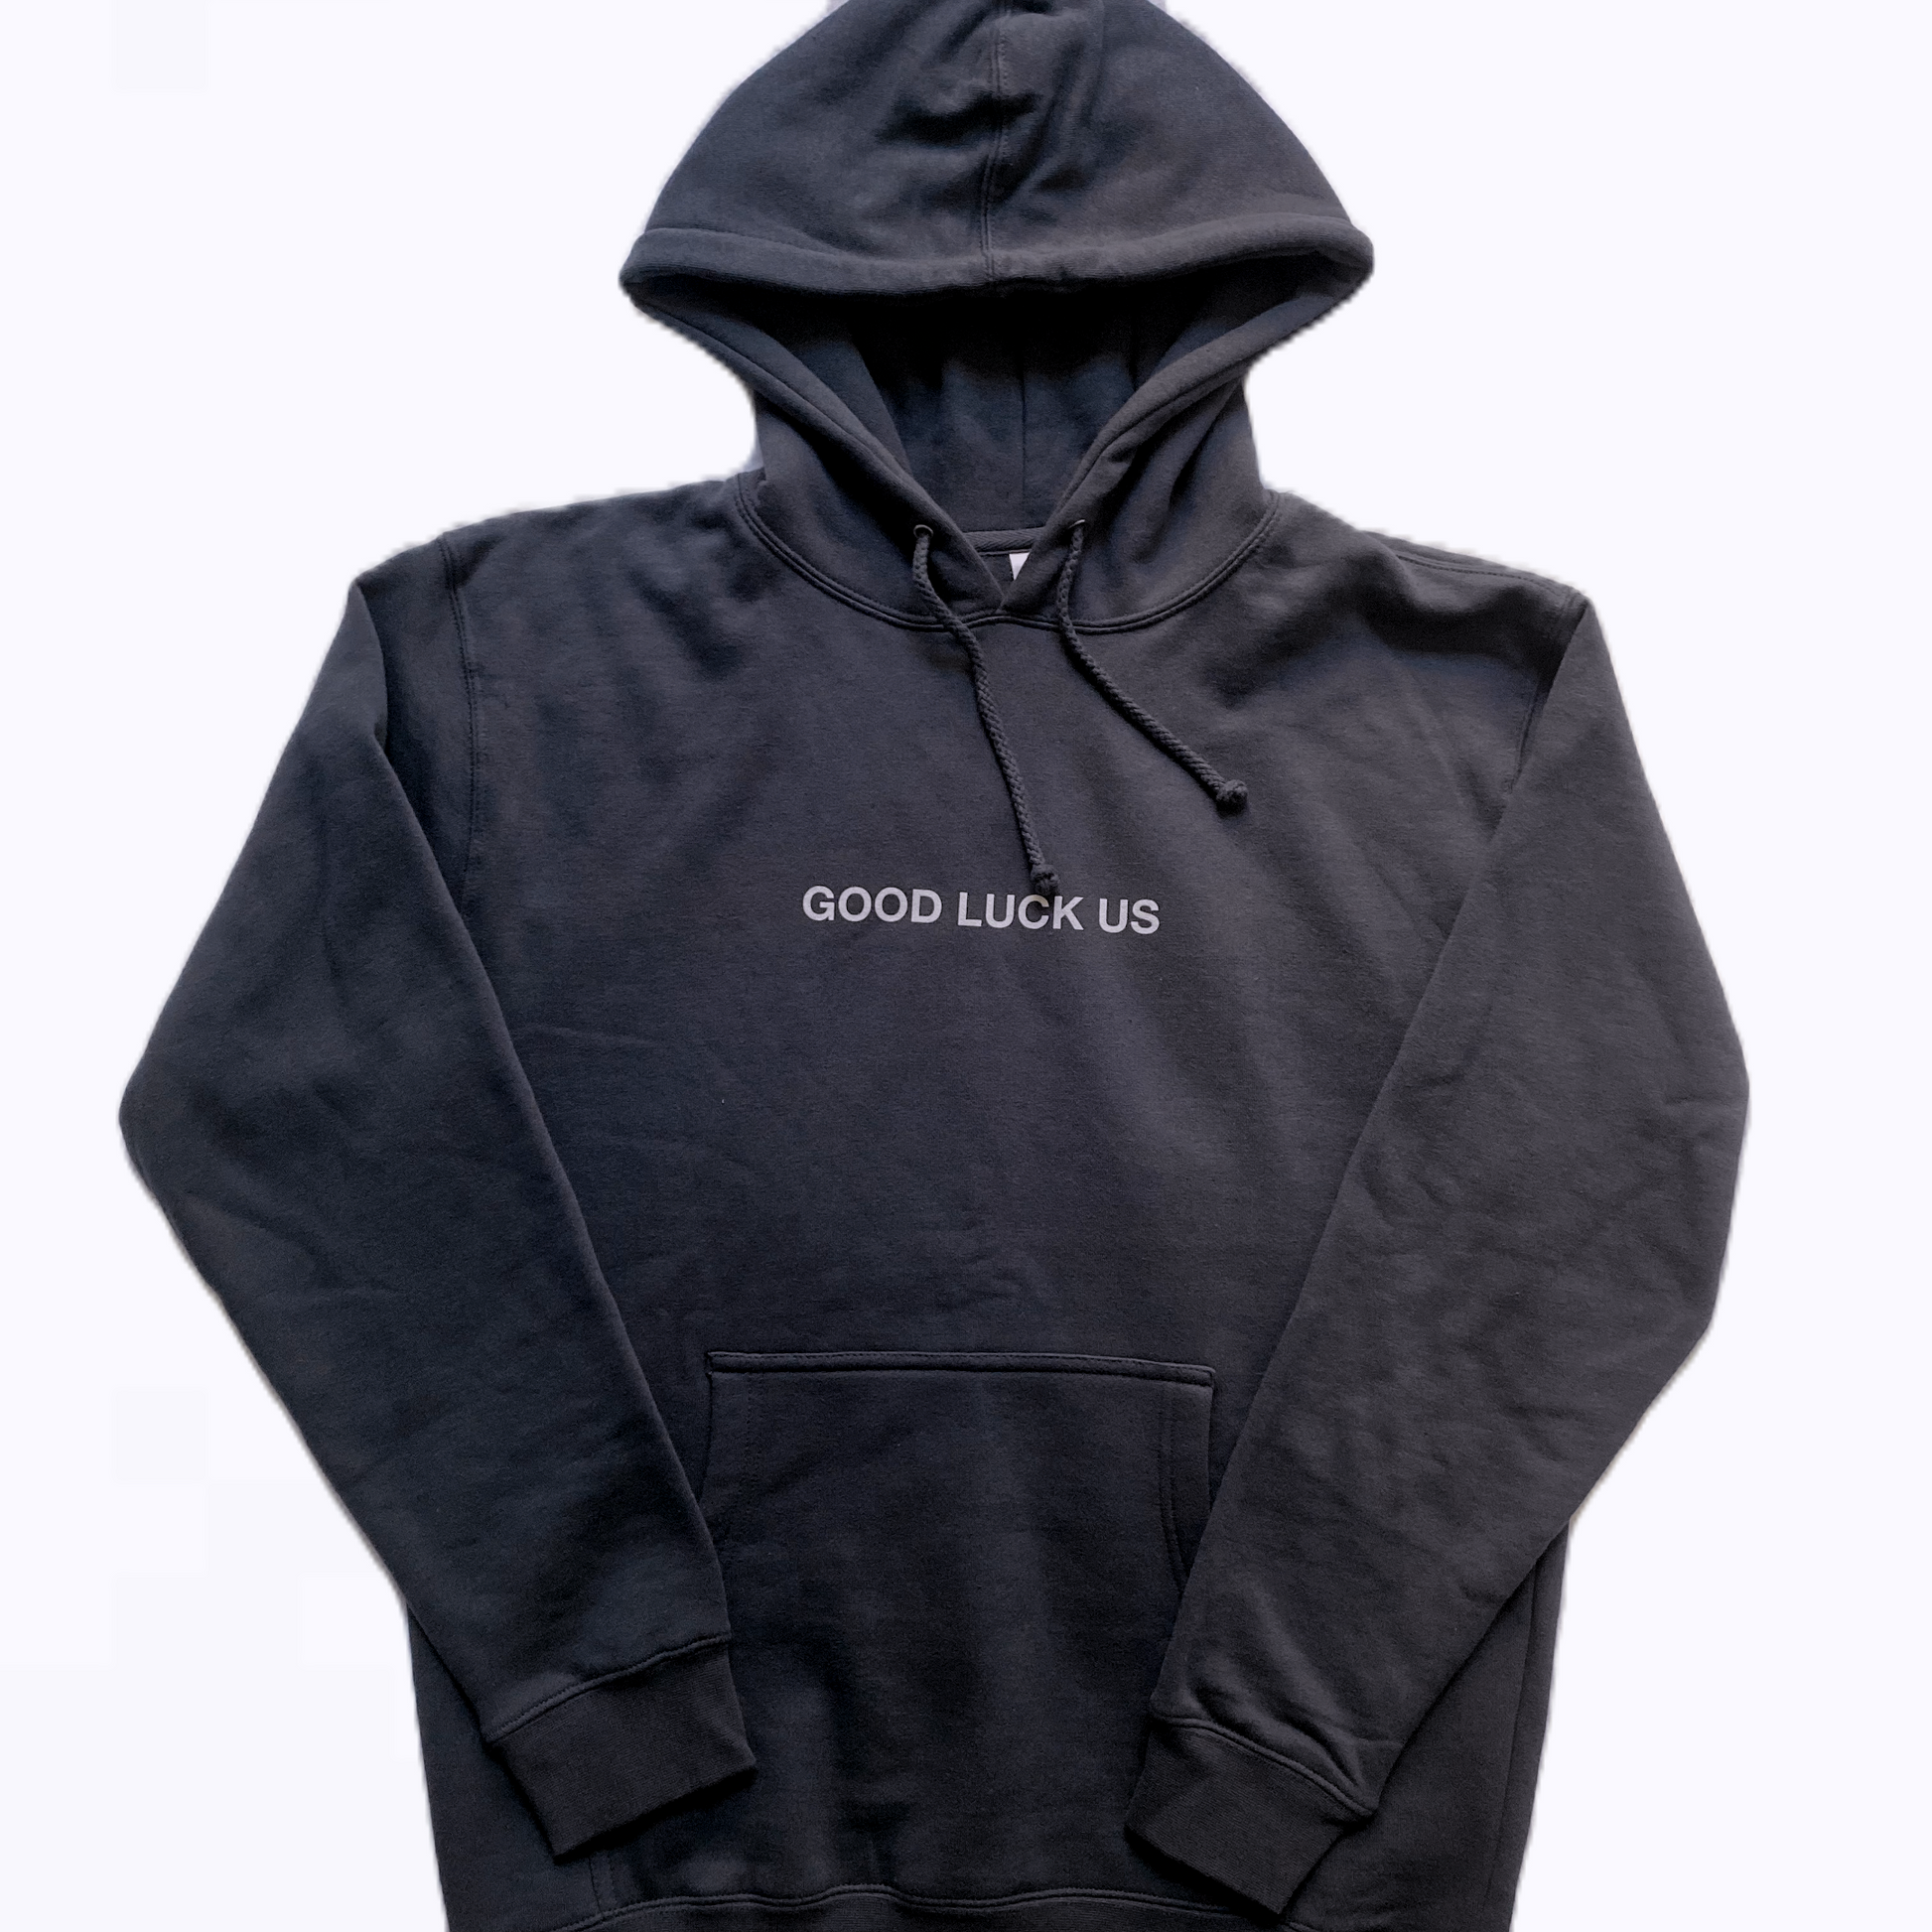 The Good Luck Us hoodie in slate blue / navy